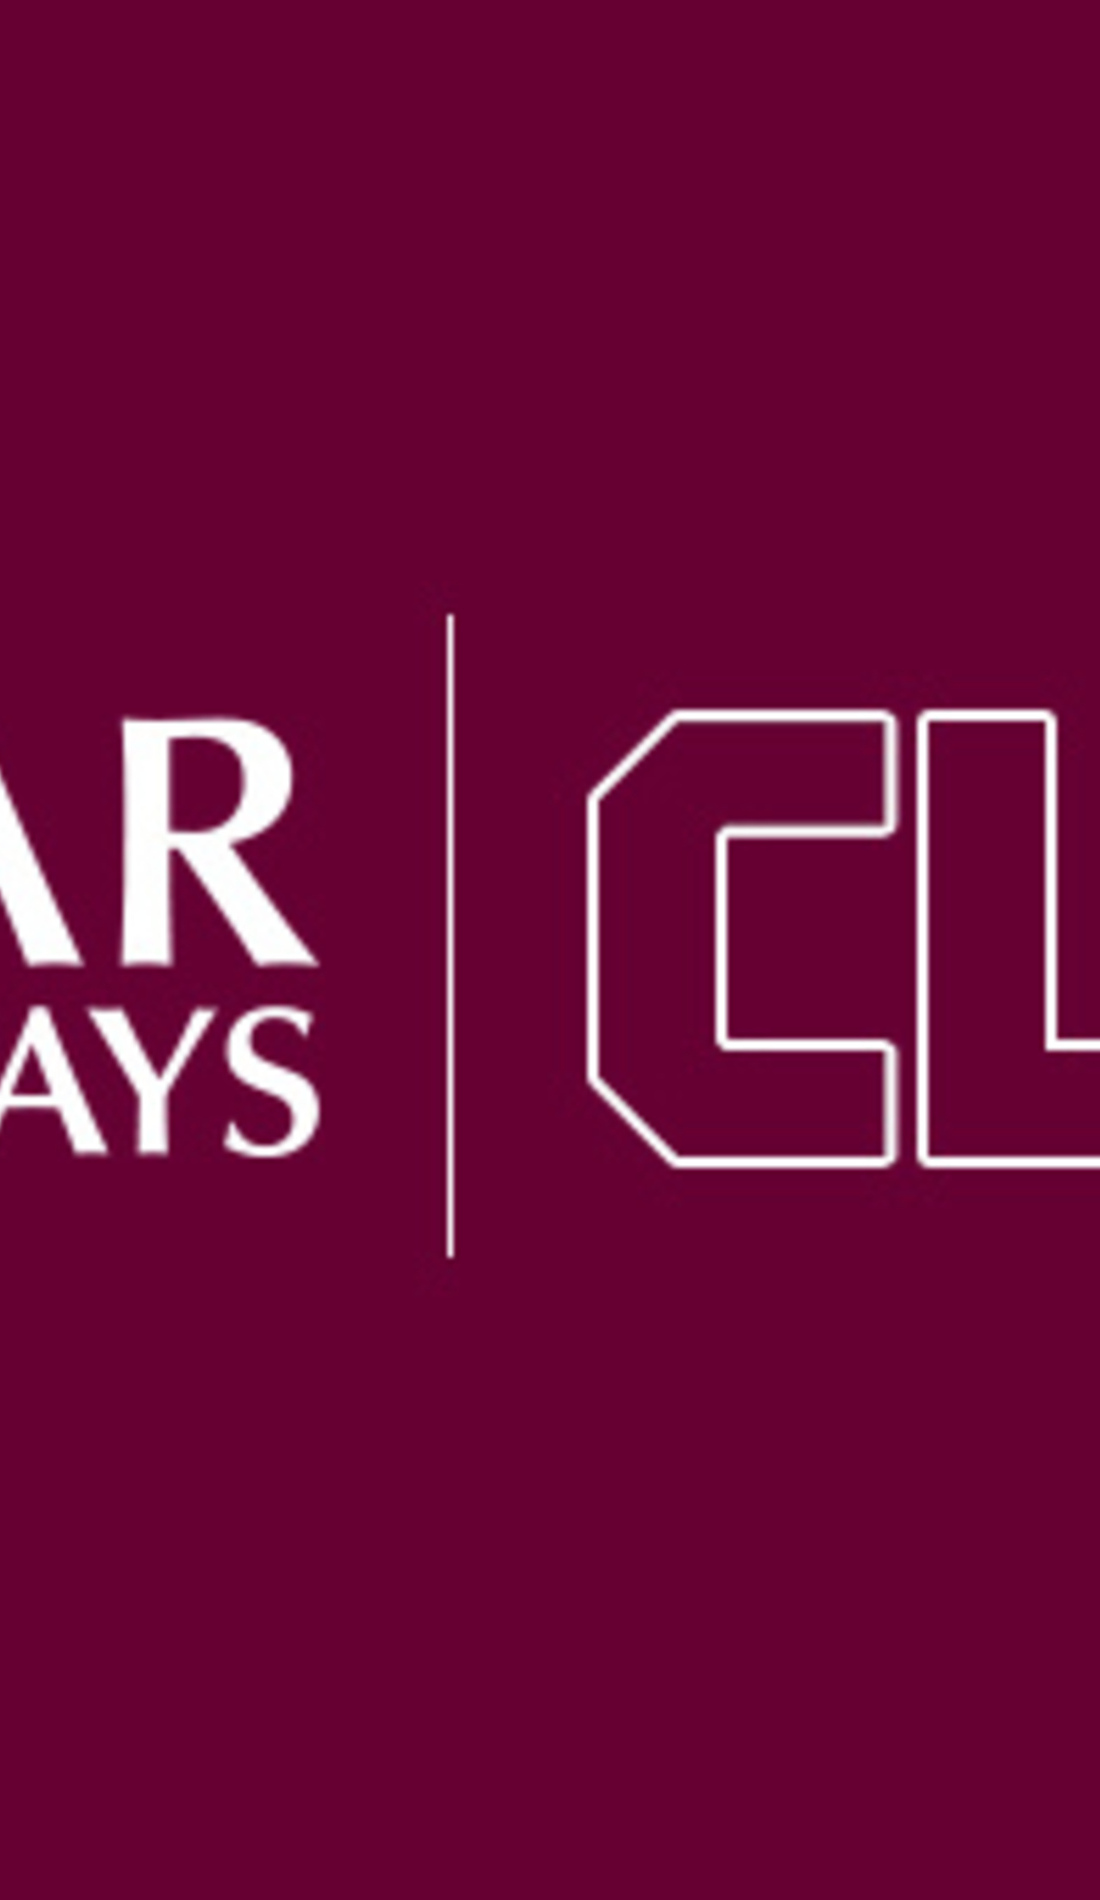 A Barclays Center Qatar Club live event